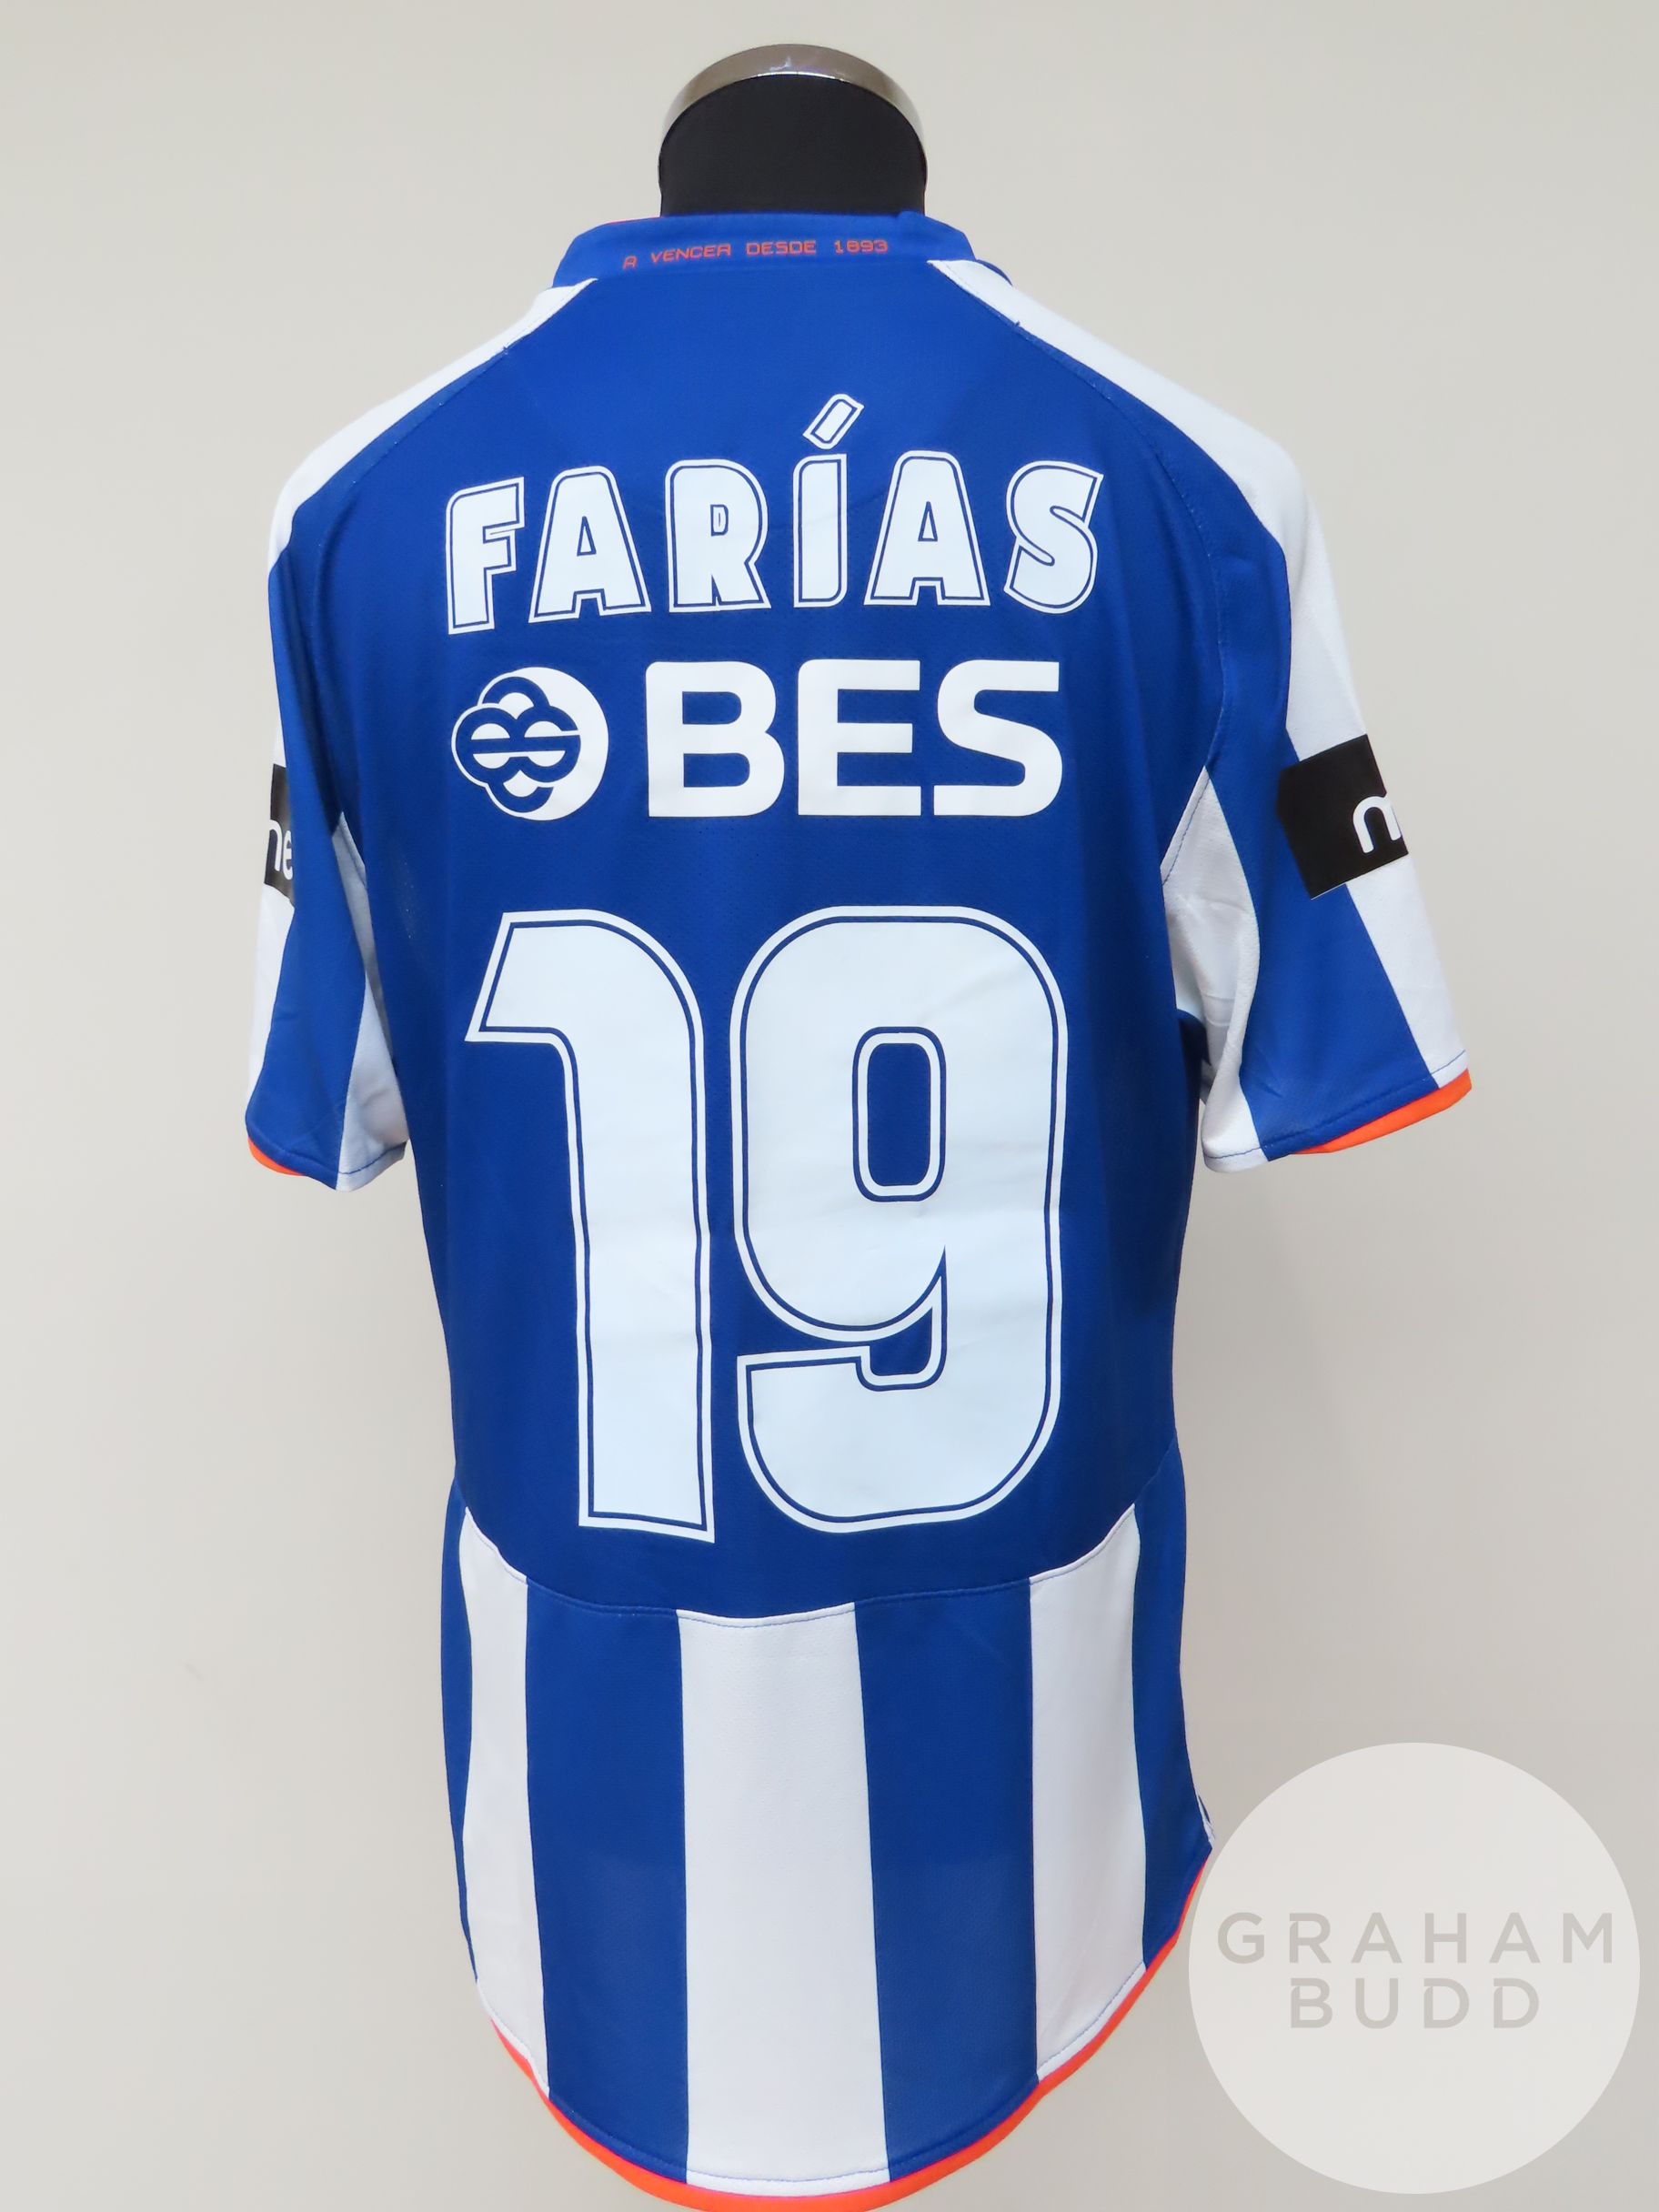 Ernesto Farias blue and white FC Porto no.19 shirt, 2008-09, - Image 2 of 2